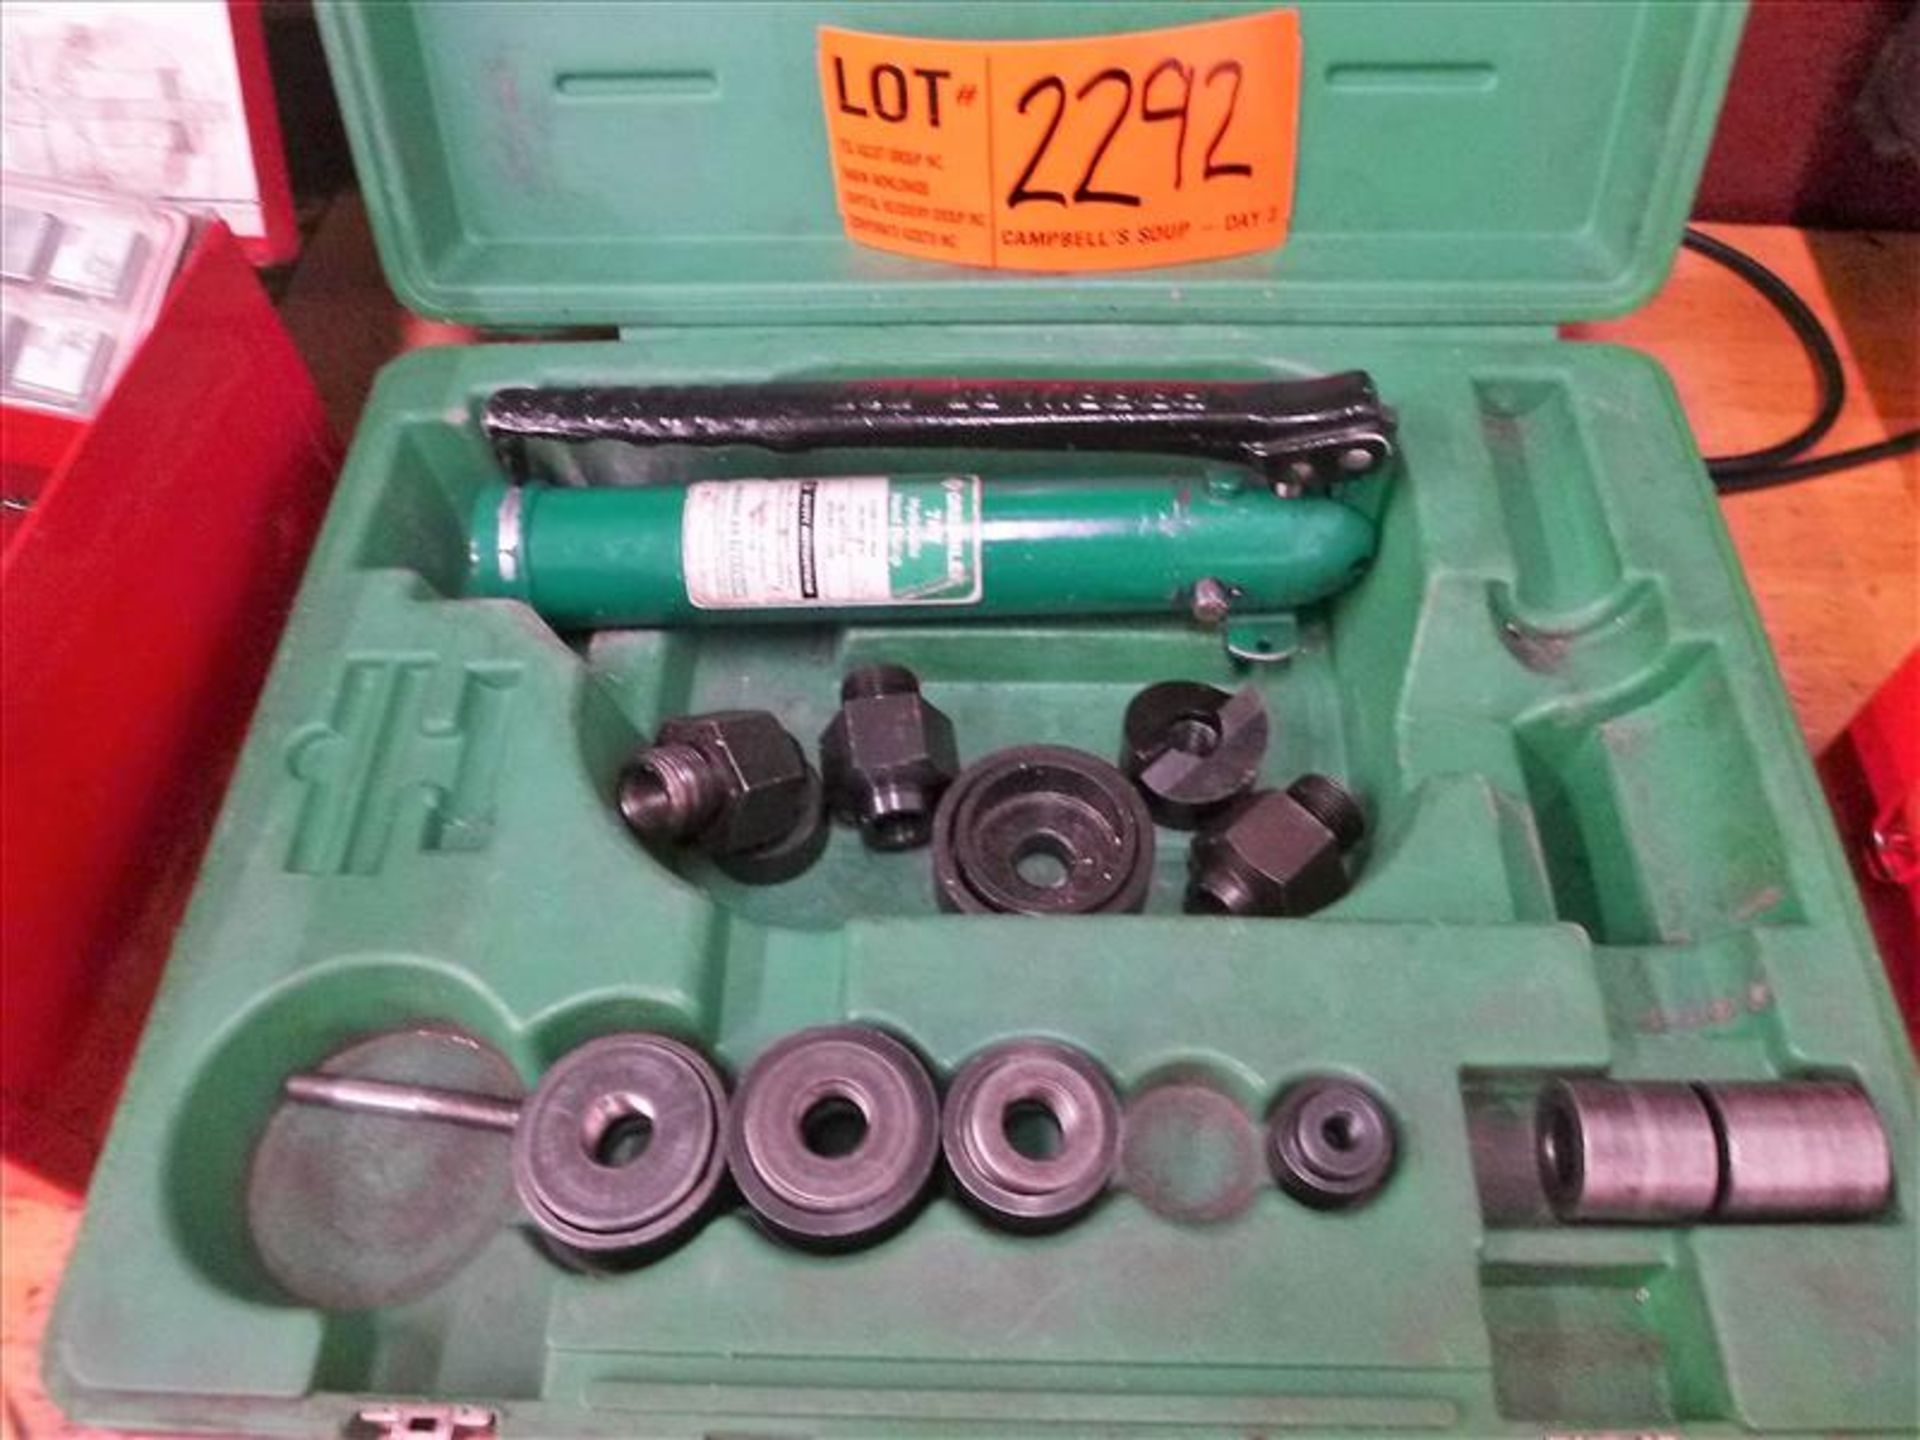 Green Lee hydraulic hand pump, mod. 767 [Elec. Shop, 1st Floor]